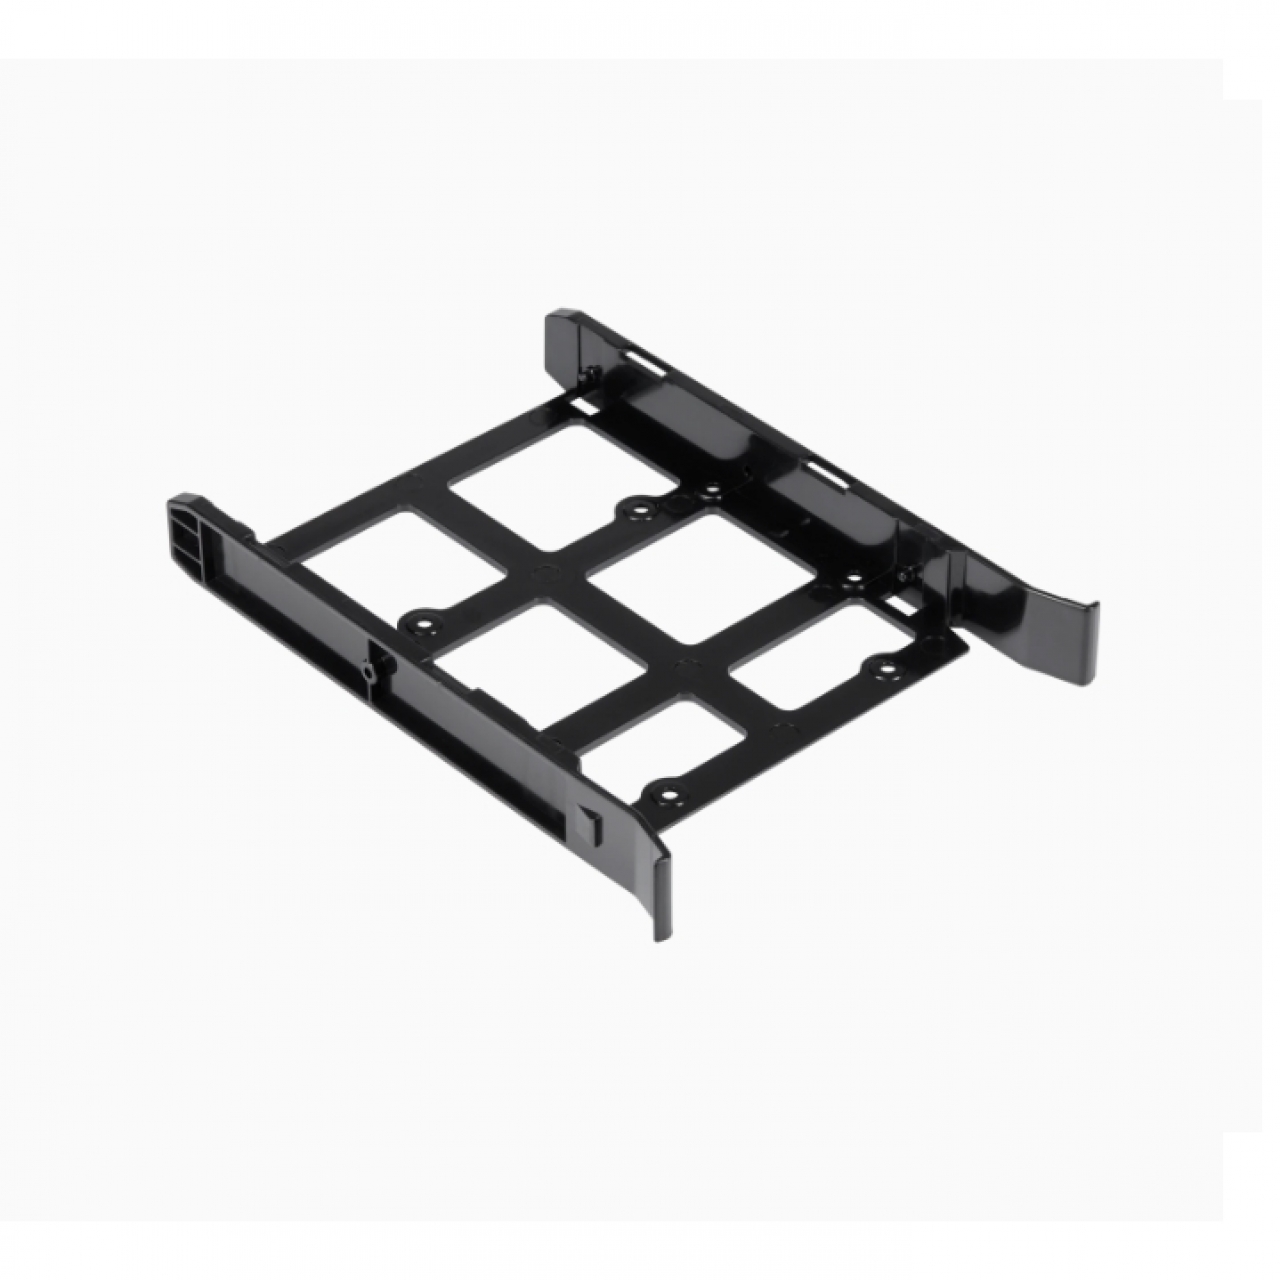 CORSAIR CC-8900319 Carbide SPEC-DELTA RGB HDD Tray, Black